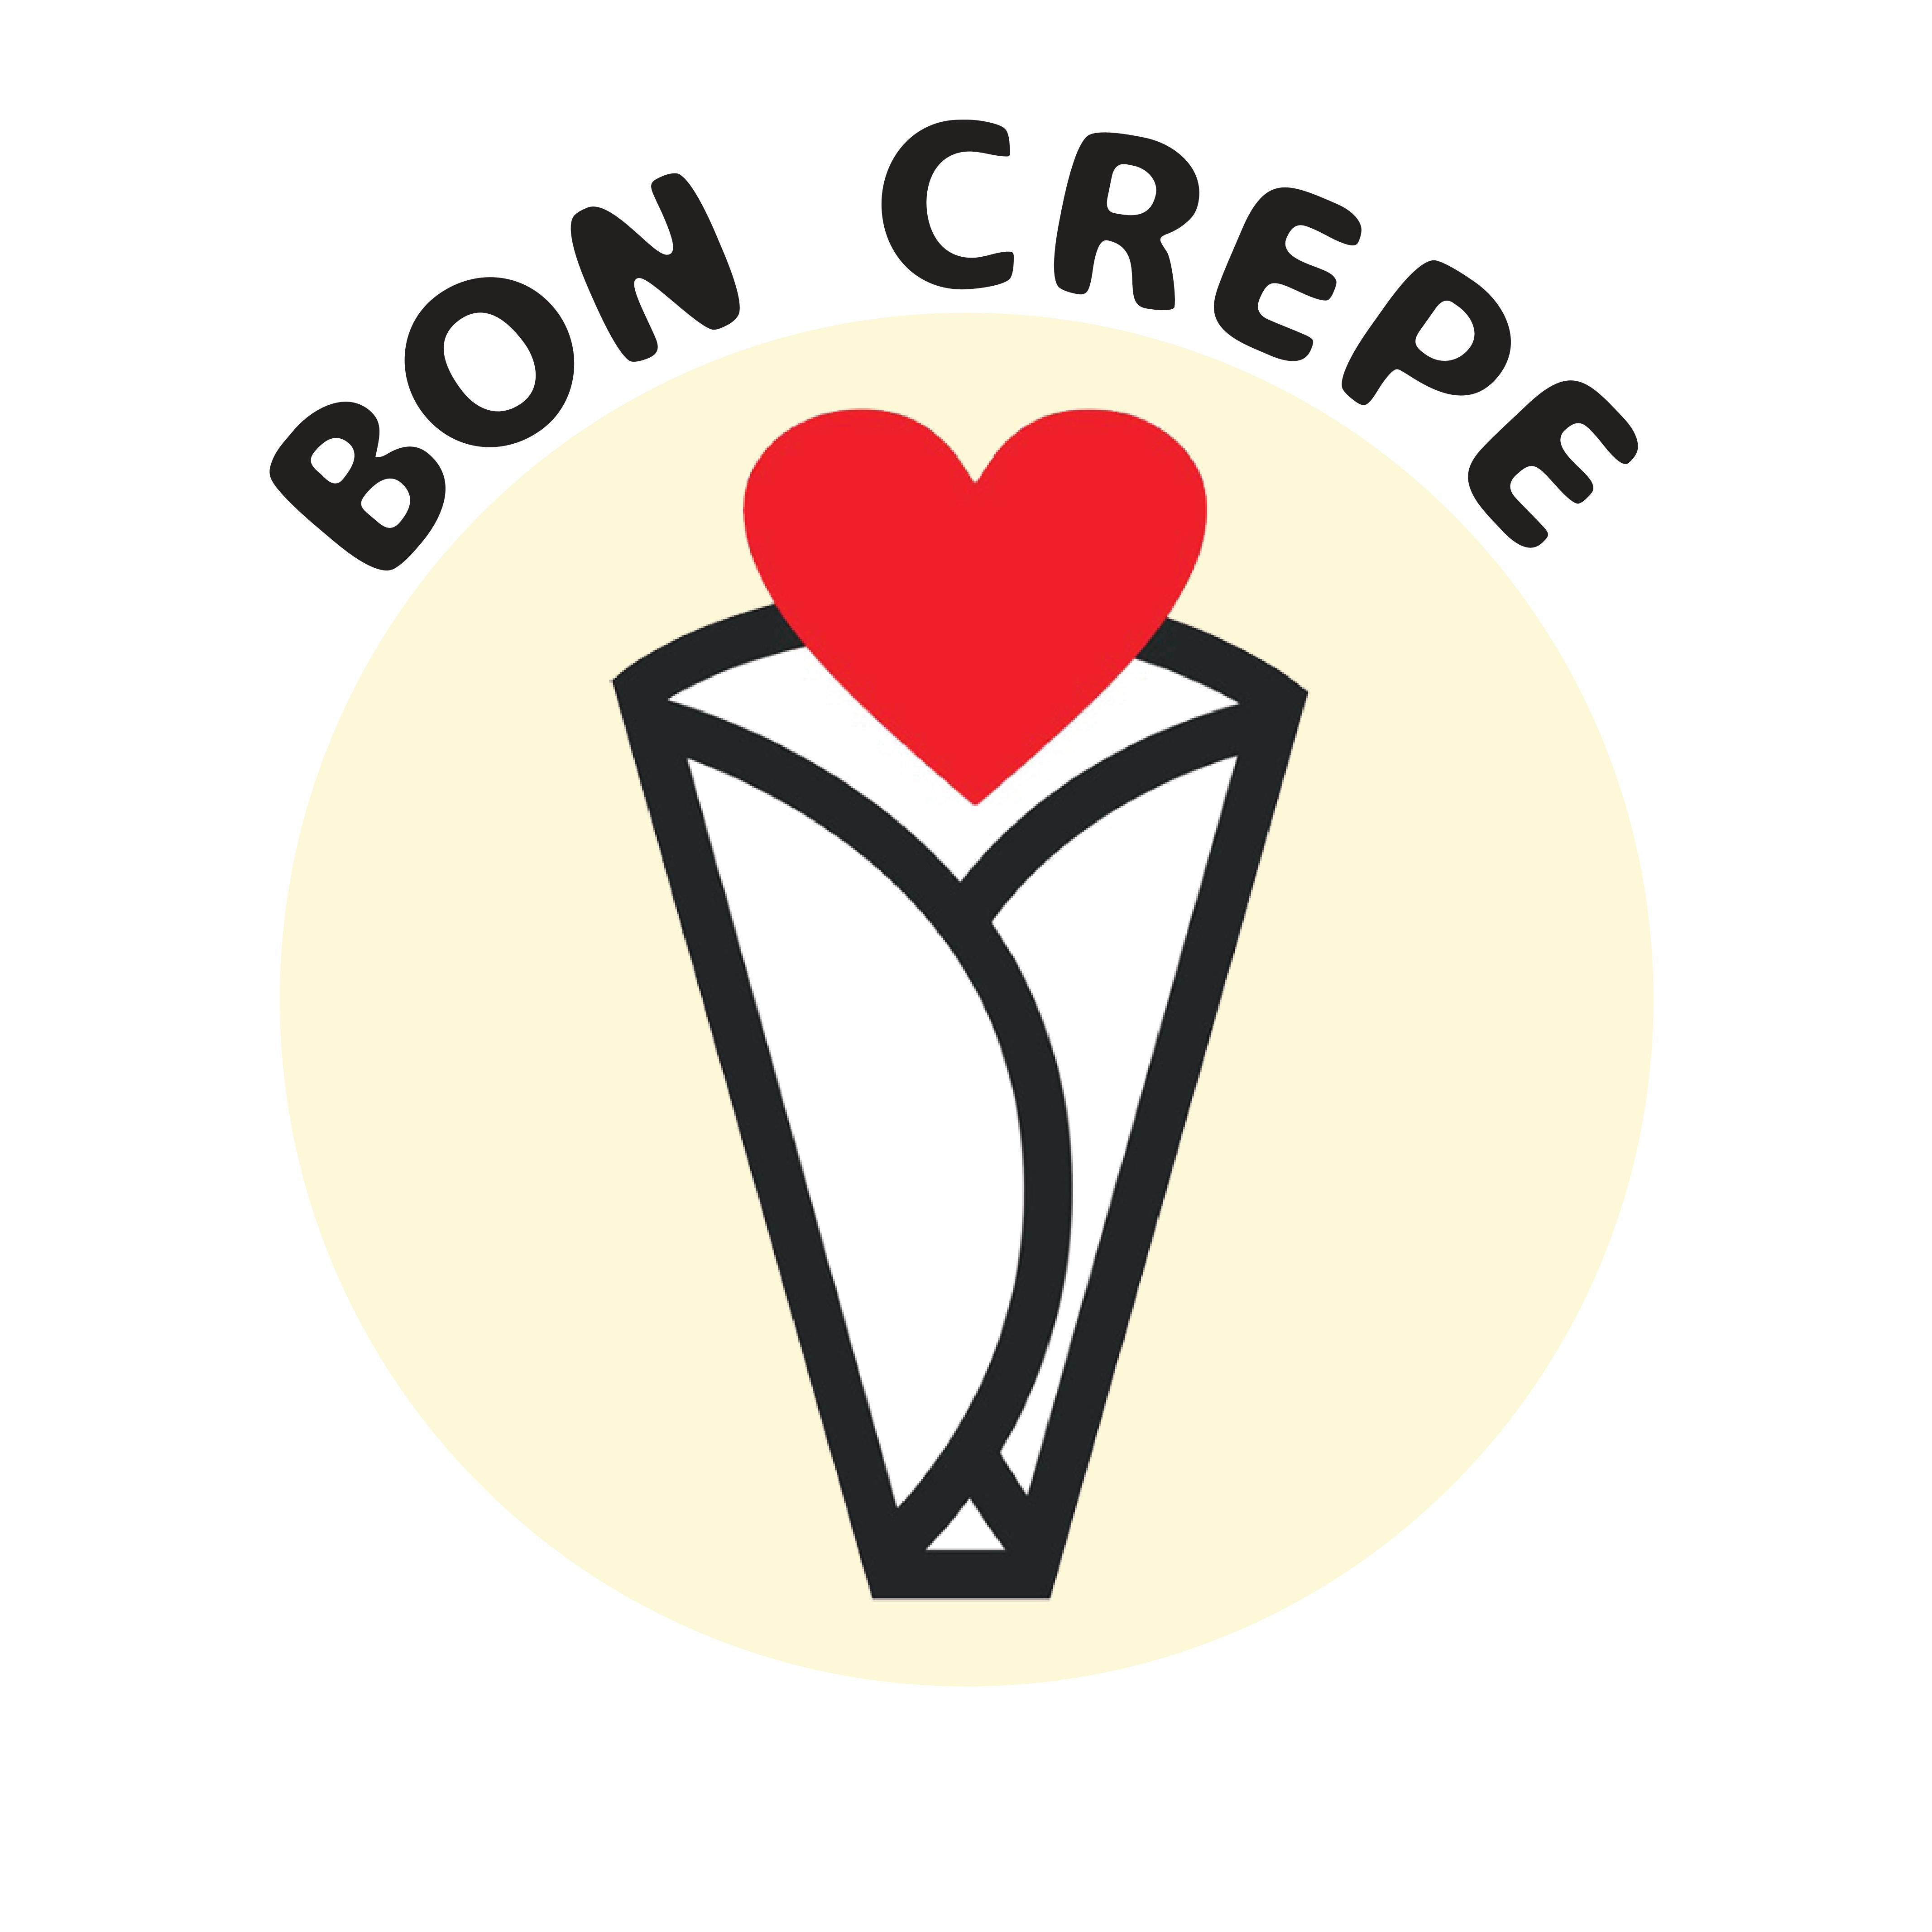 Head Crepe Cook - Bon Crepe / konbiniya Japan Centre Title image